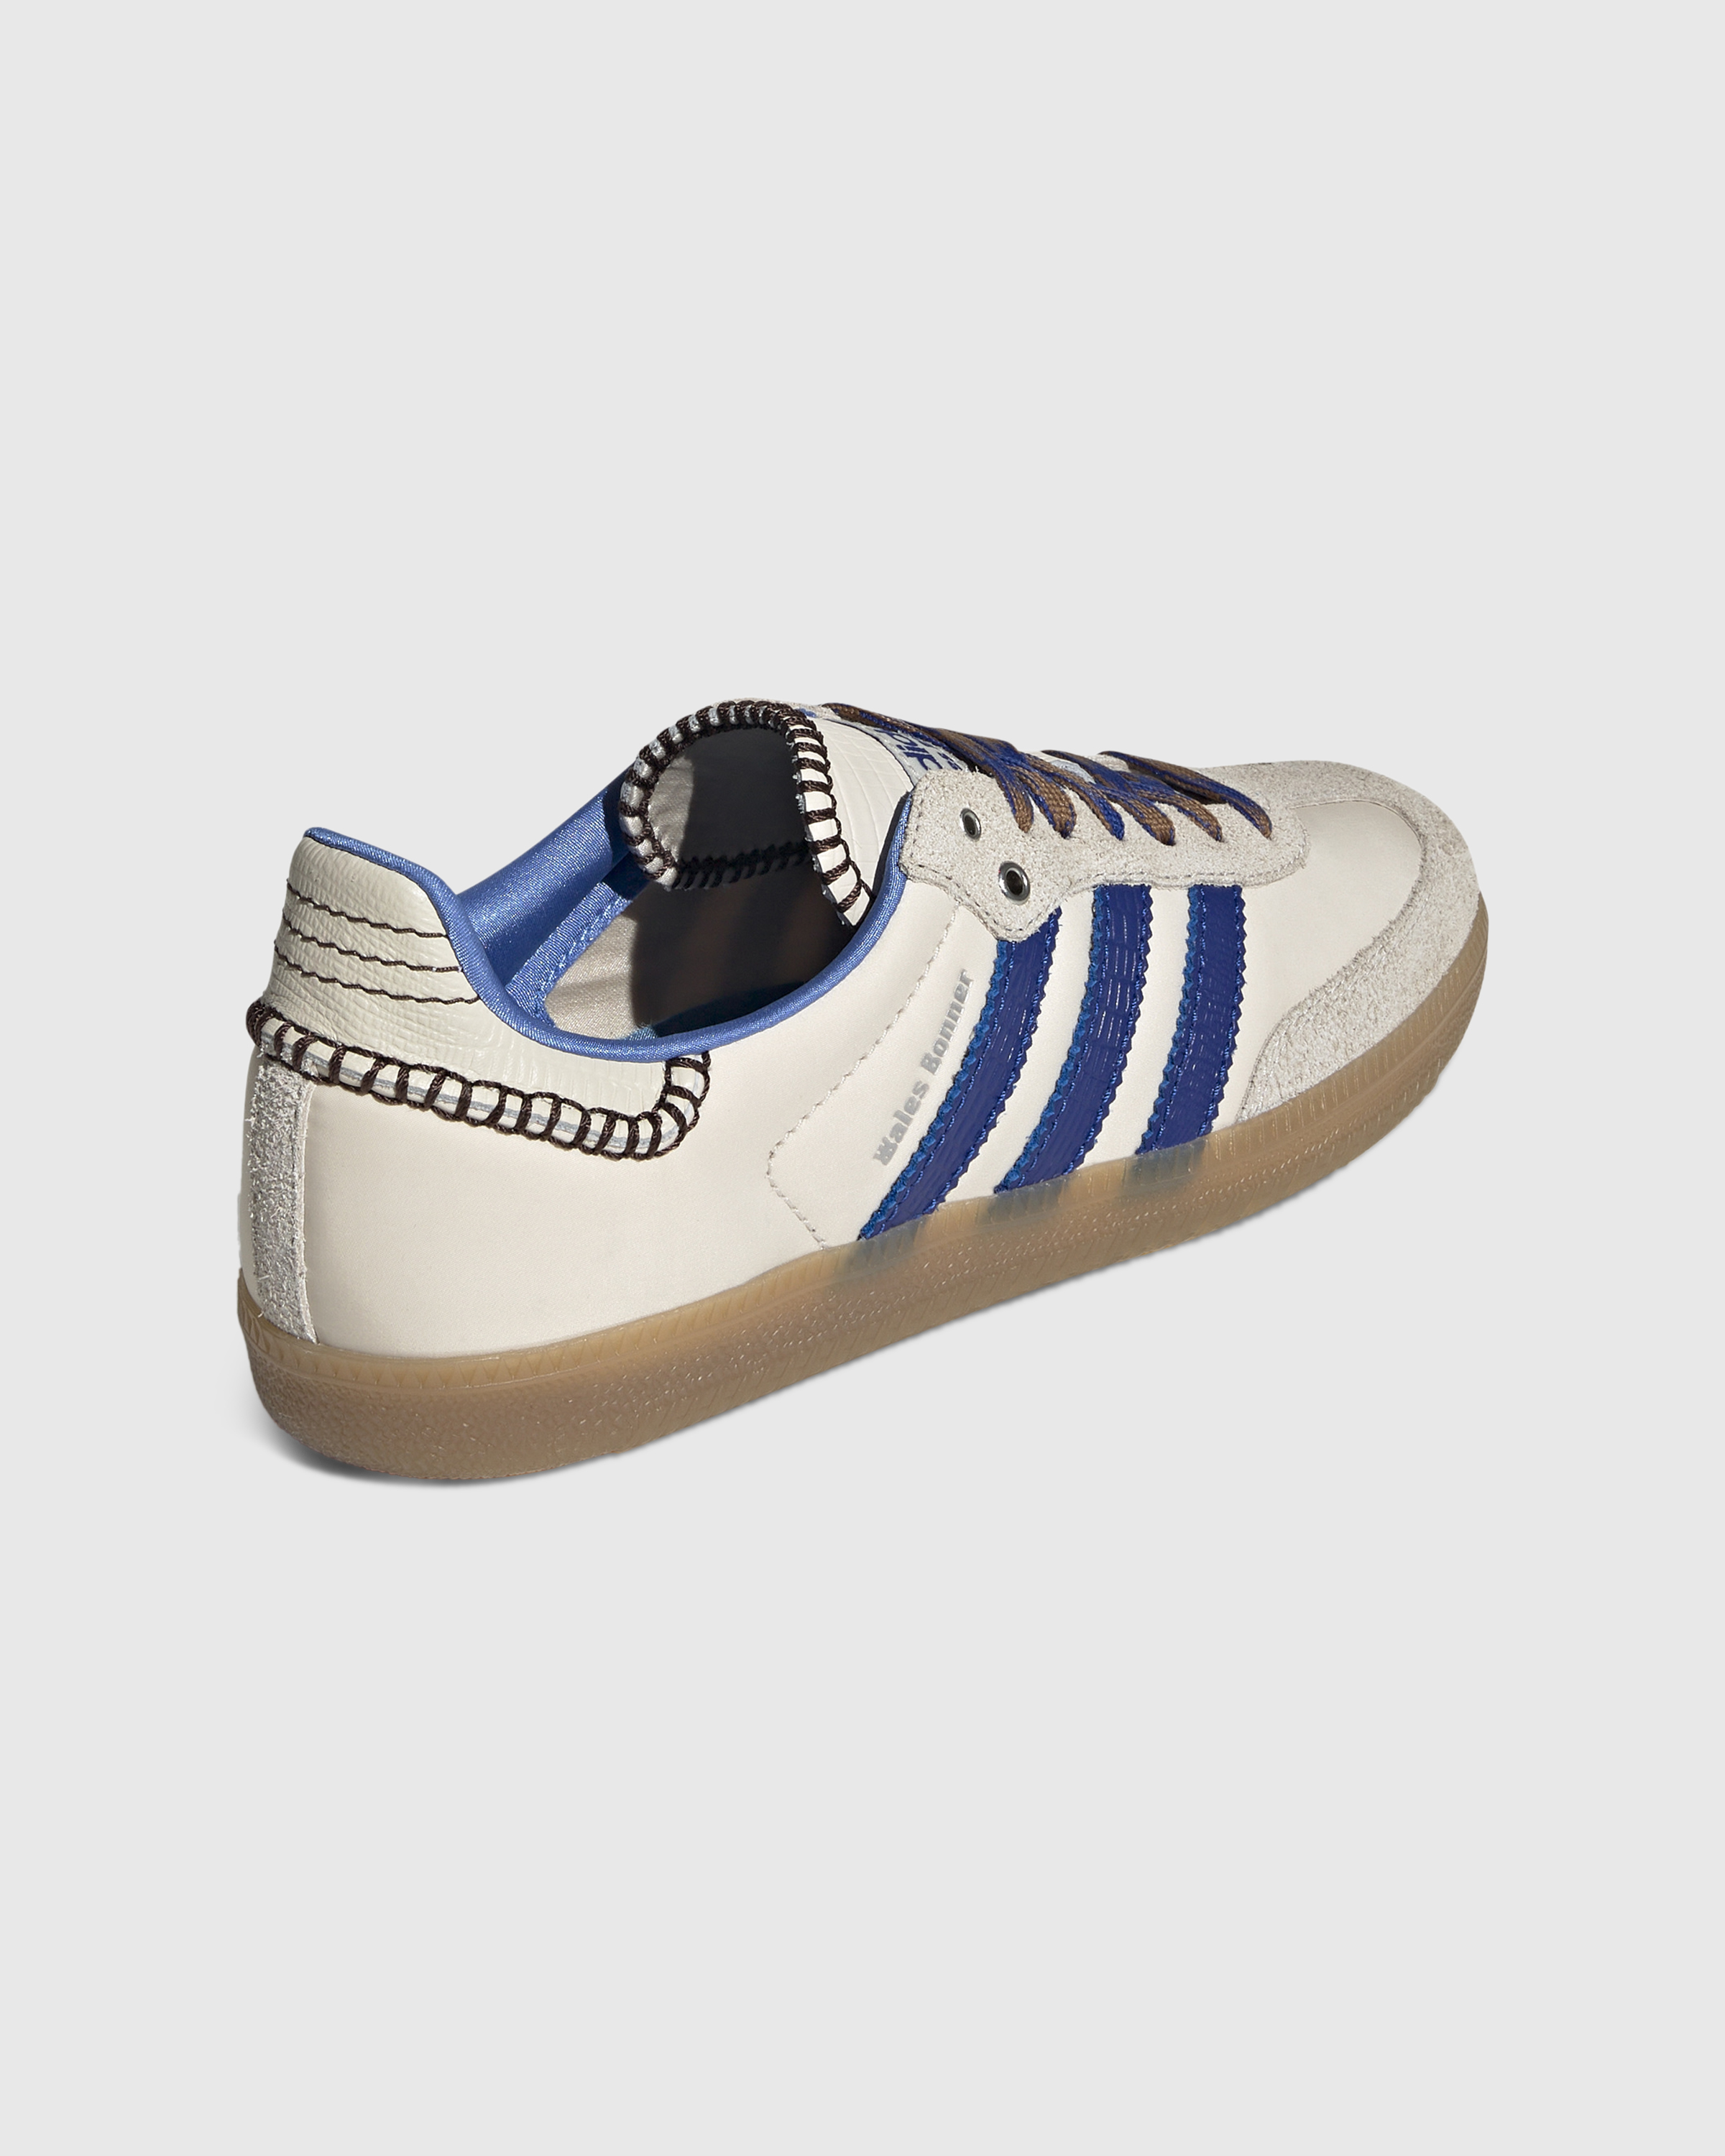 Adidas x Wales Bonner – Samba Cream/Blue - Low Top Sneakers - Beige - Image 4